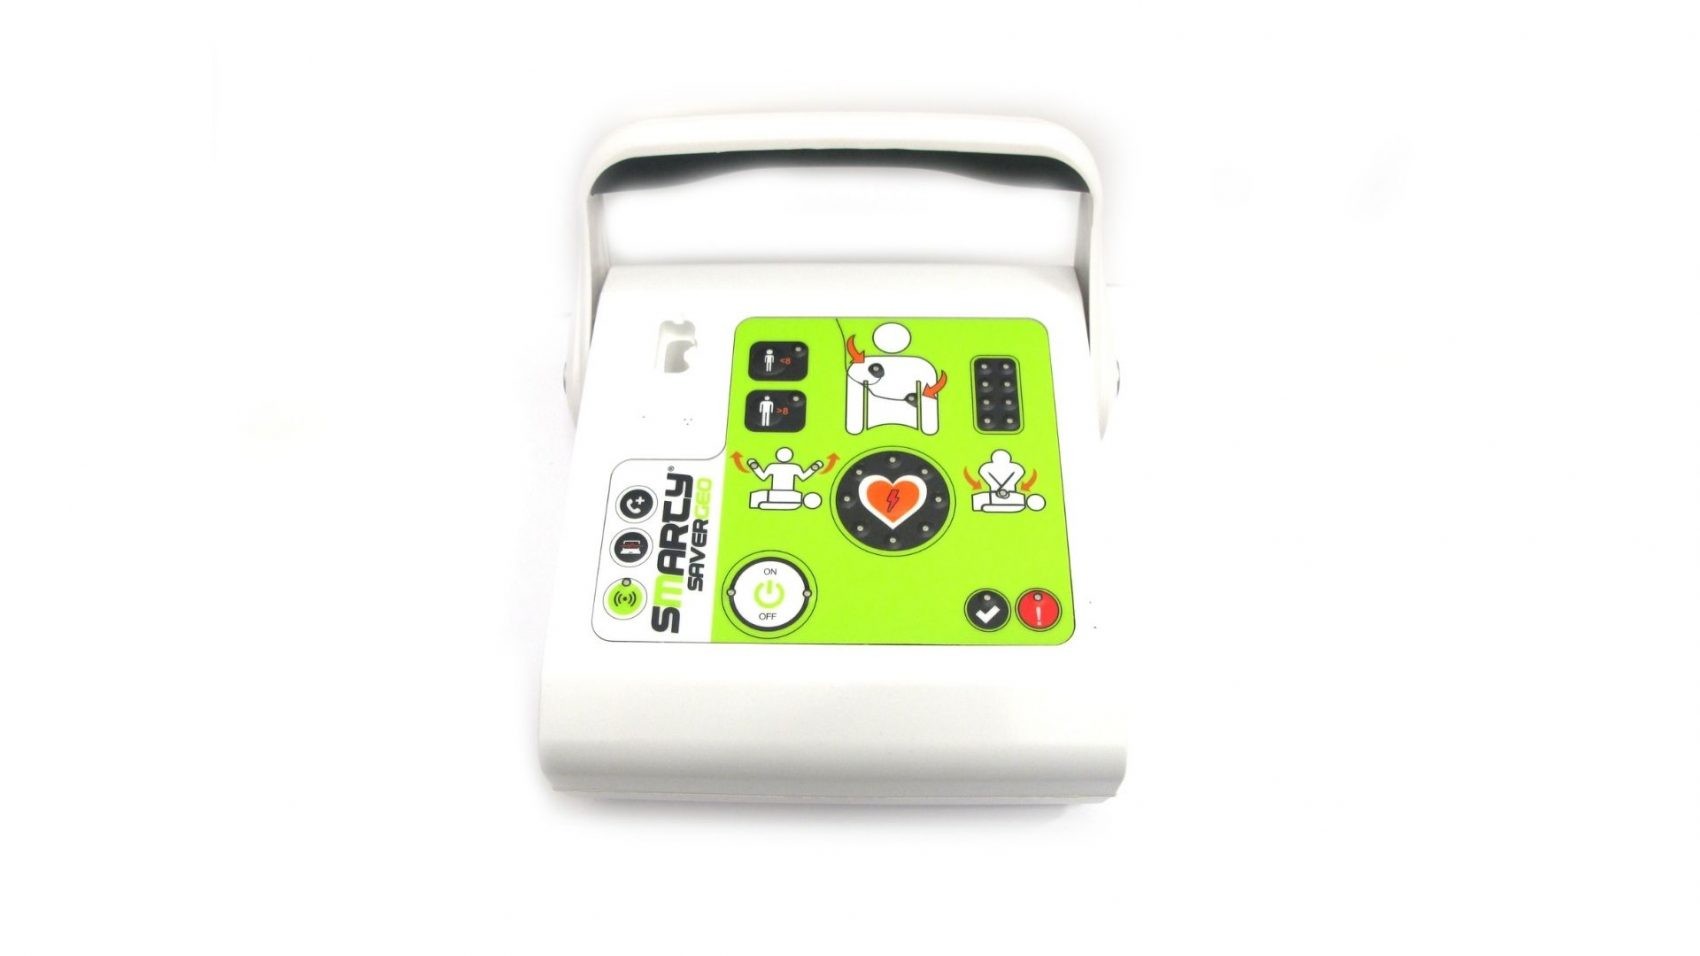 Defibrilator Smarty Saver 